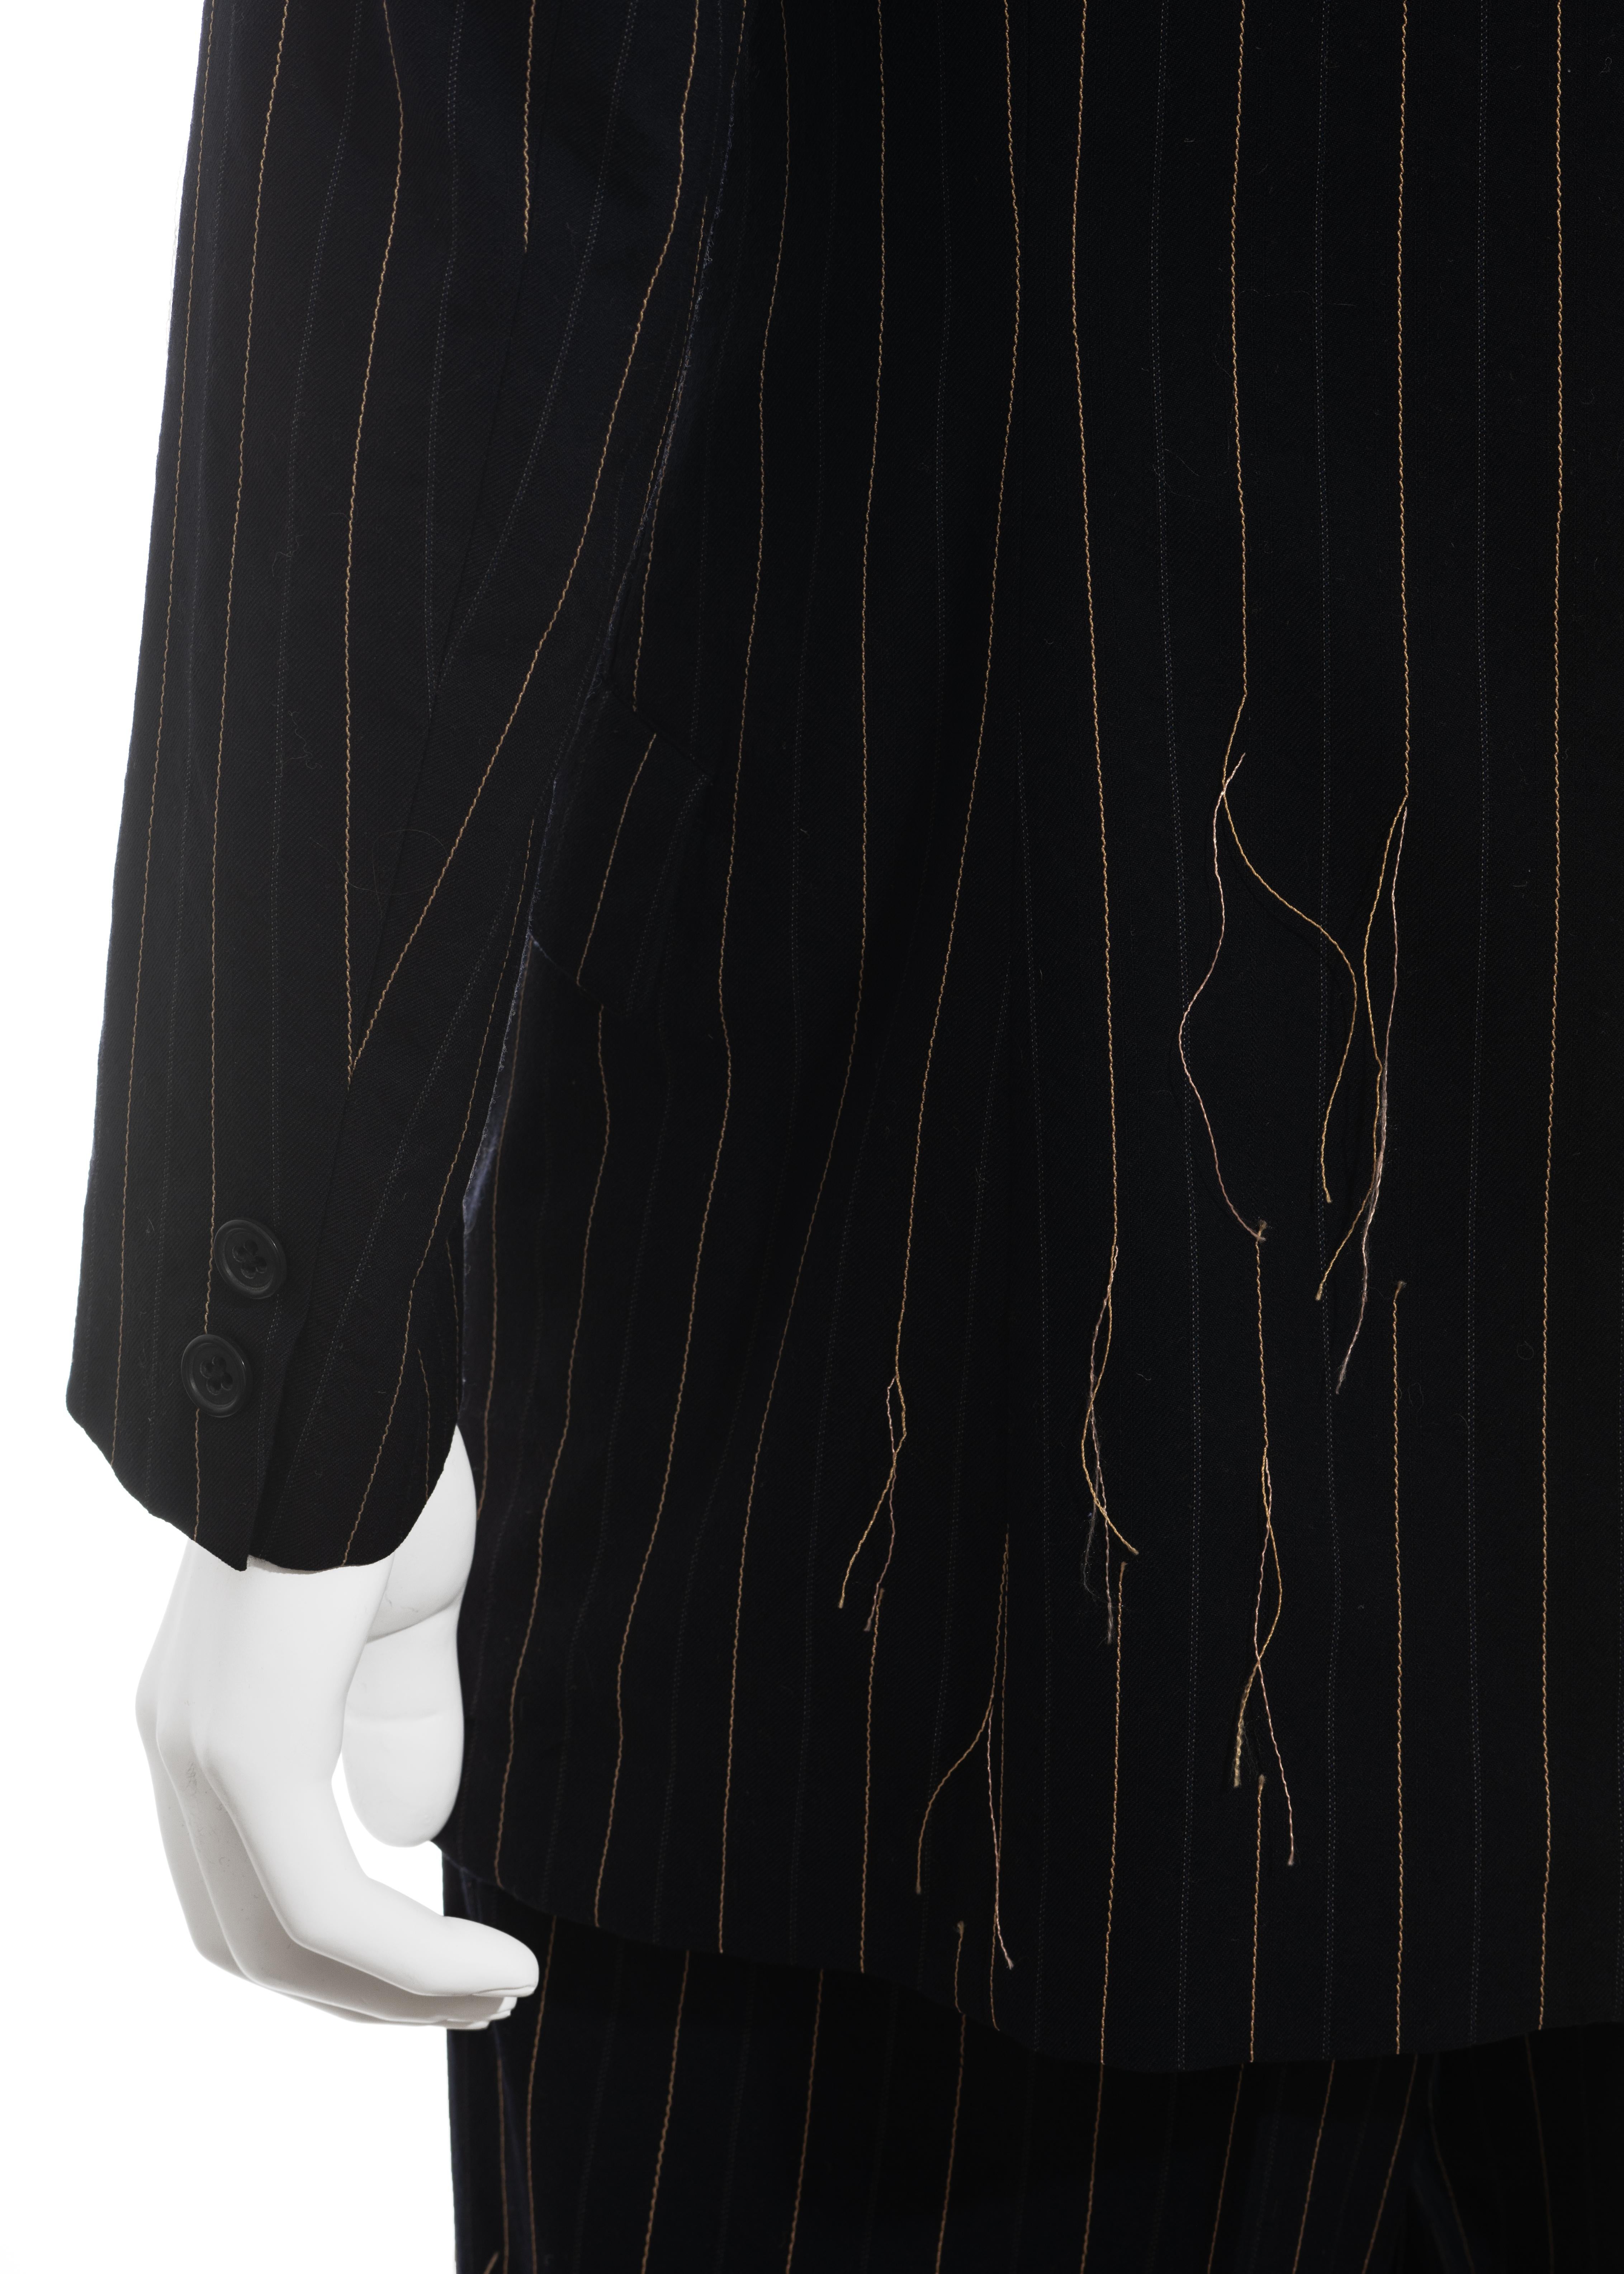 Men's Yohji Yamamoto navy frayed pinstriped wool suit, fw 2003 For Sale 4